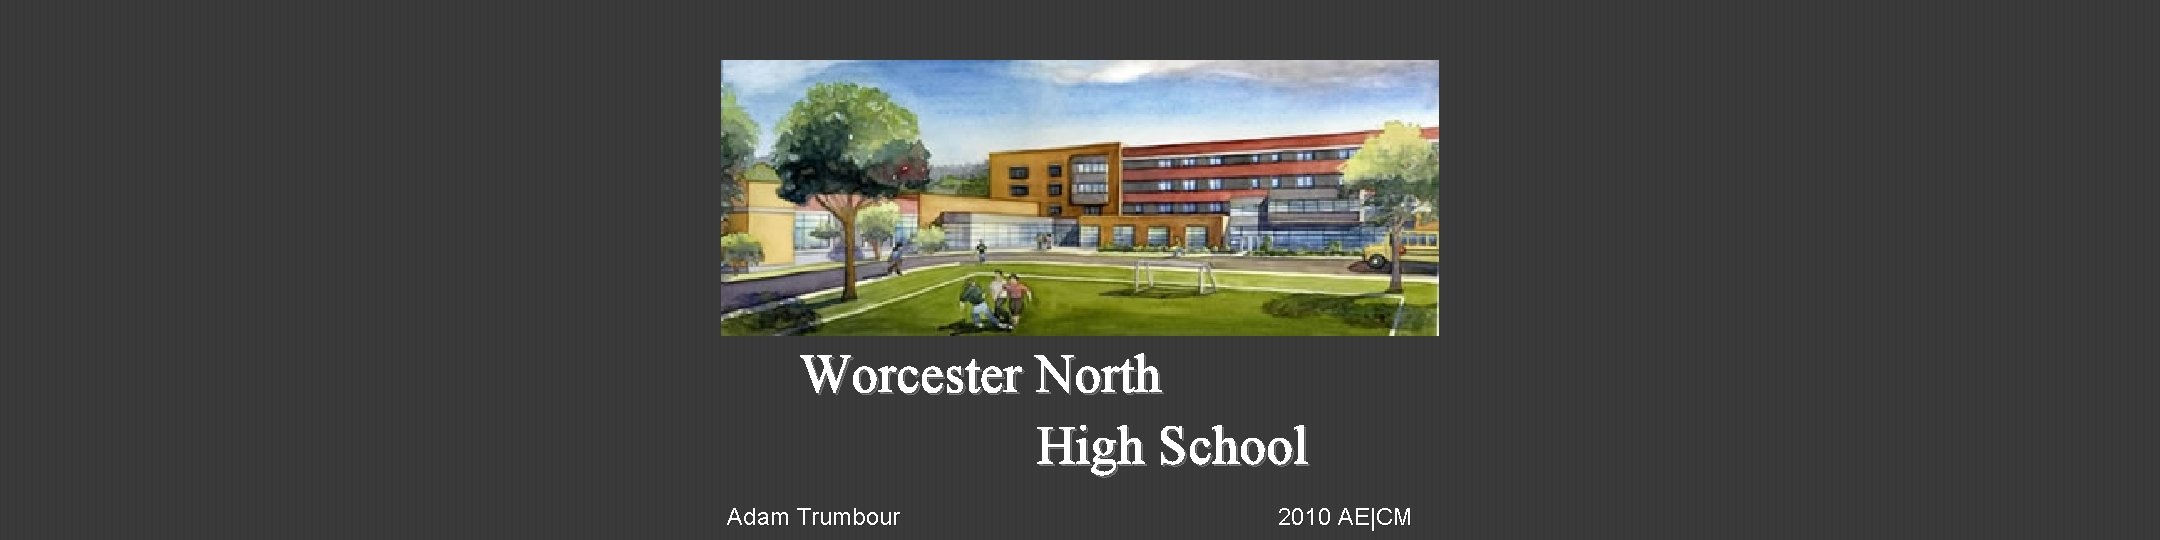 Worcester North High School Adam Trumbour 2010 AE|CM 